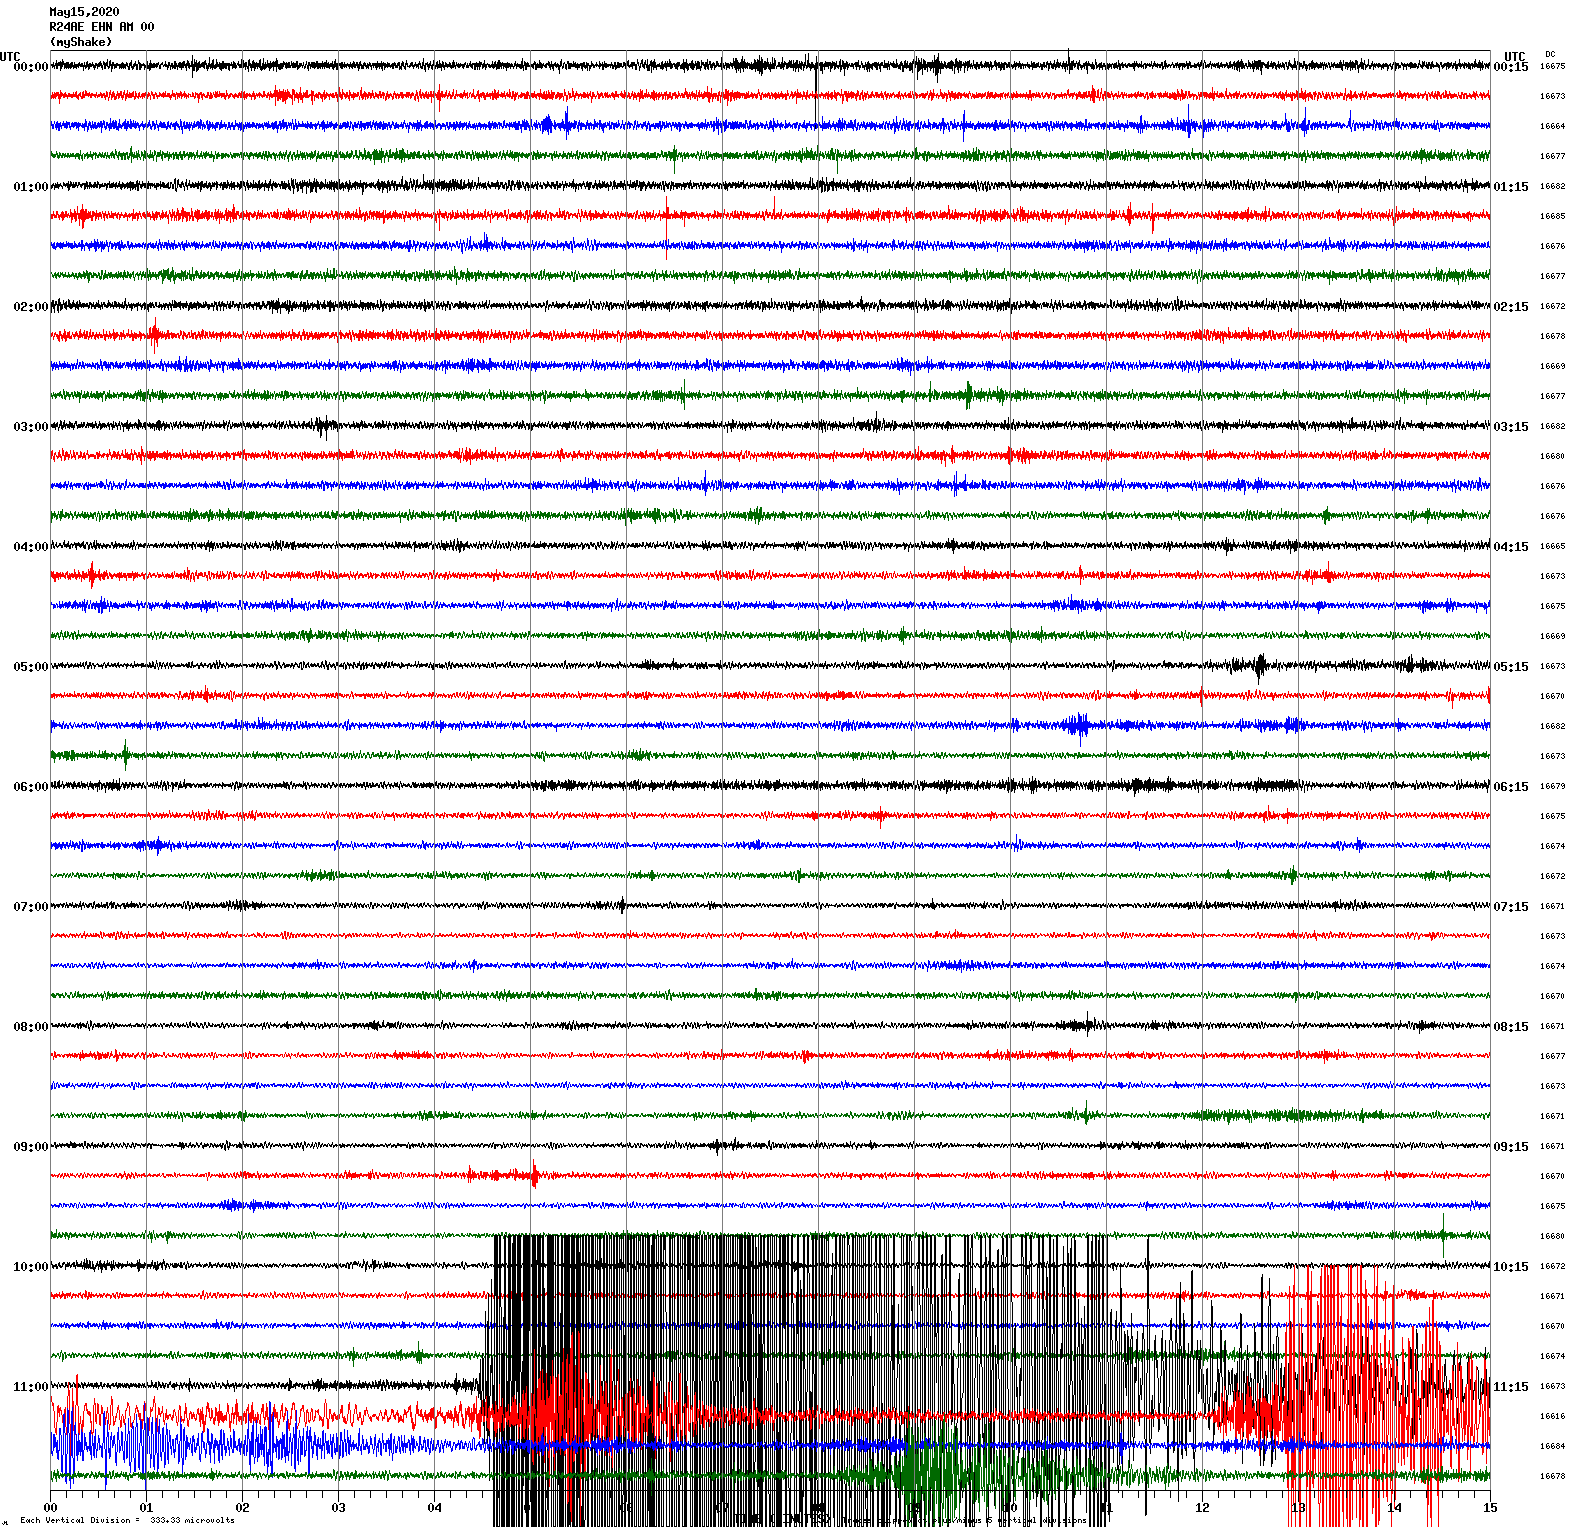 /seismic-data/R24AE/R24AE_EHN_AM_00.2020051500.gif